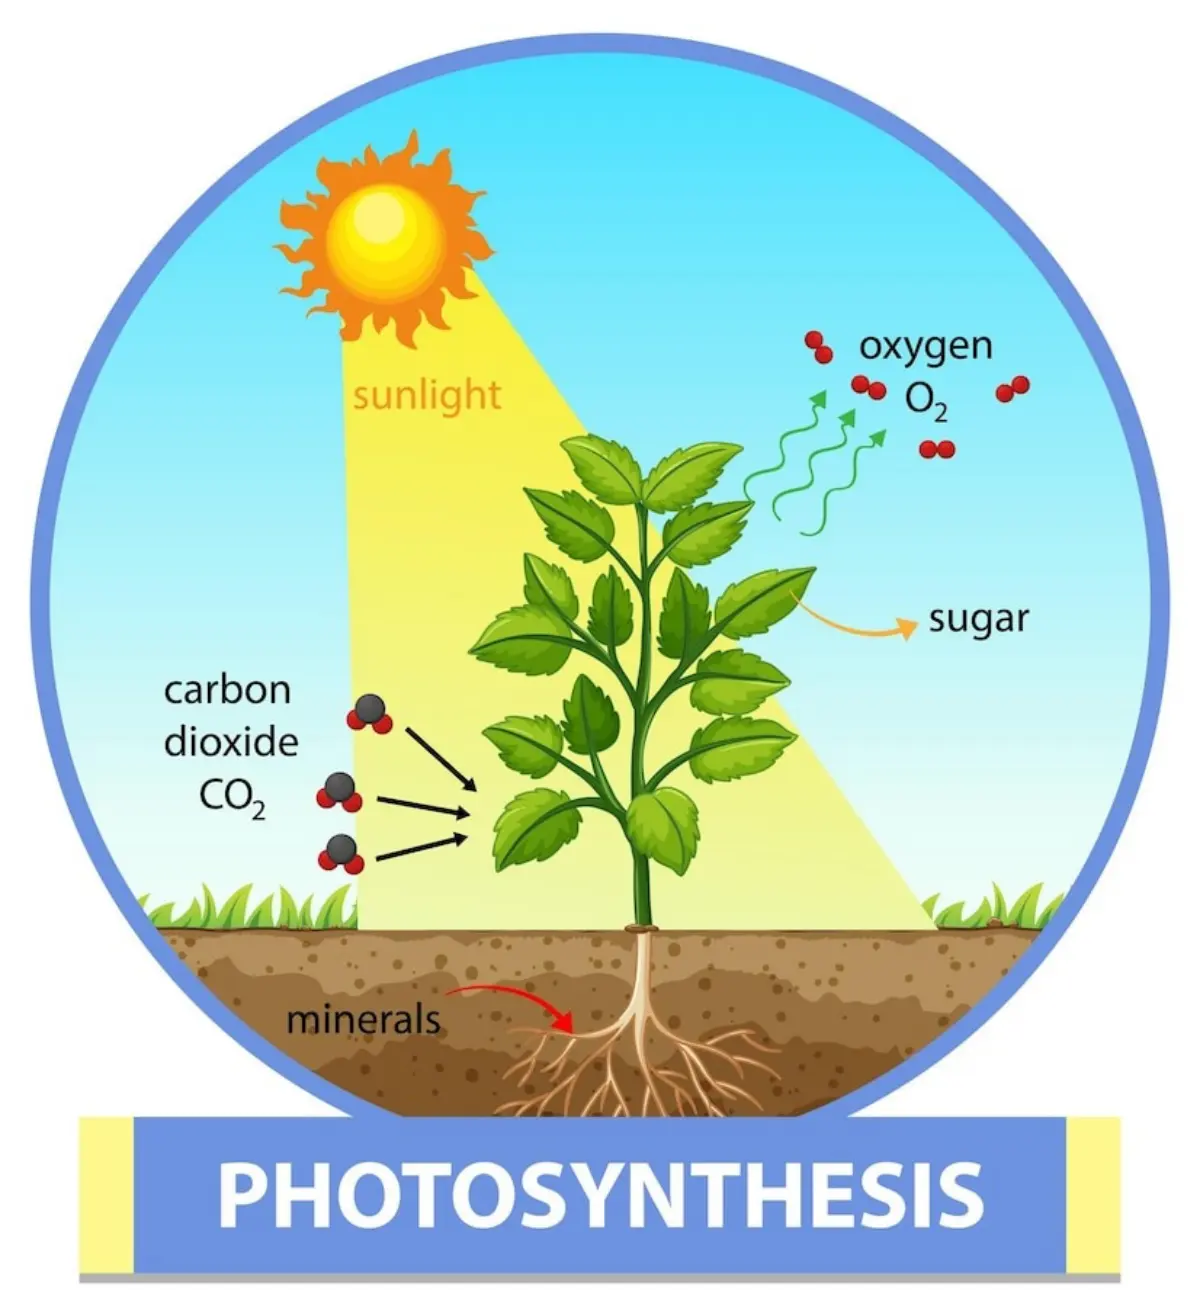 processus photosynthese croissance plante nutriments environnement conditions tomate culture